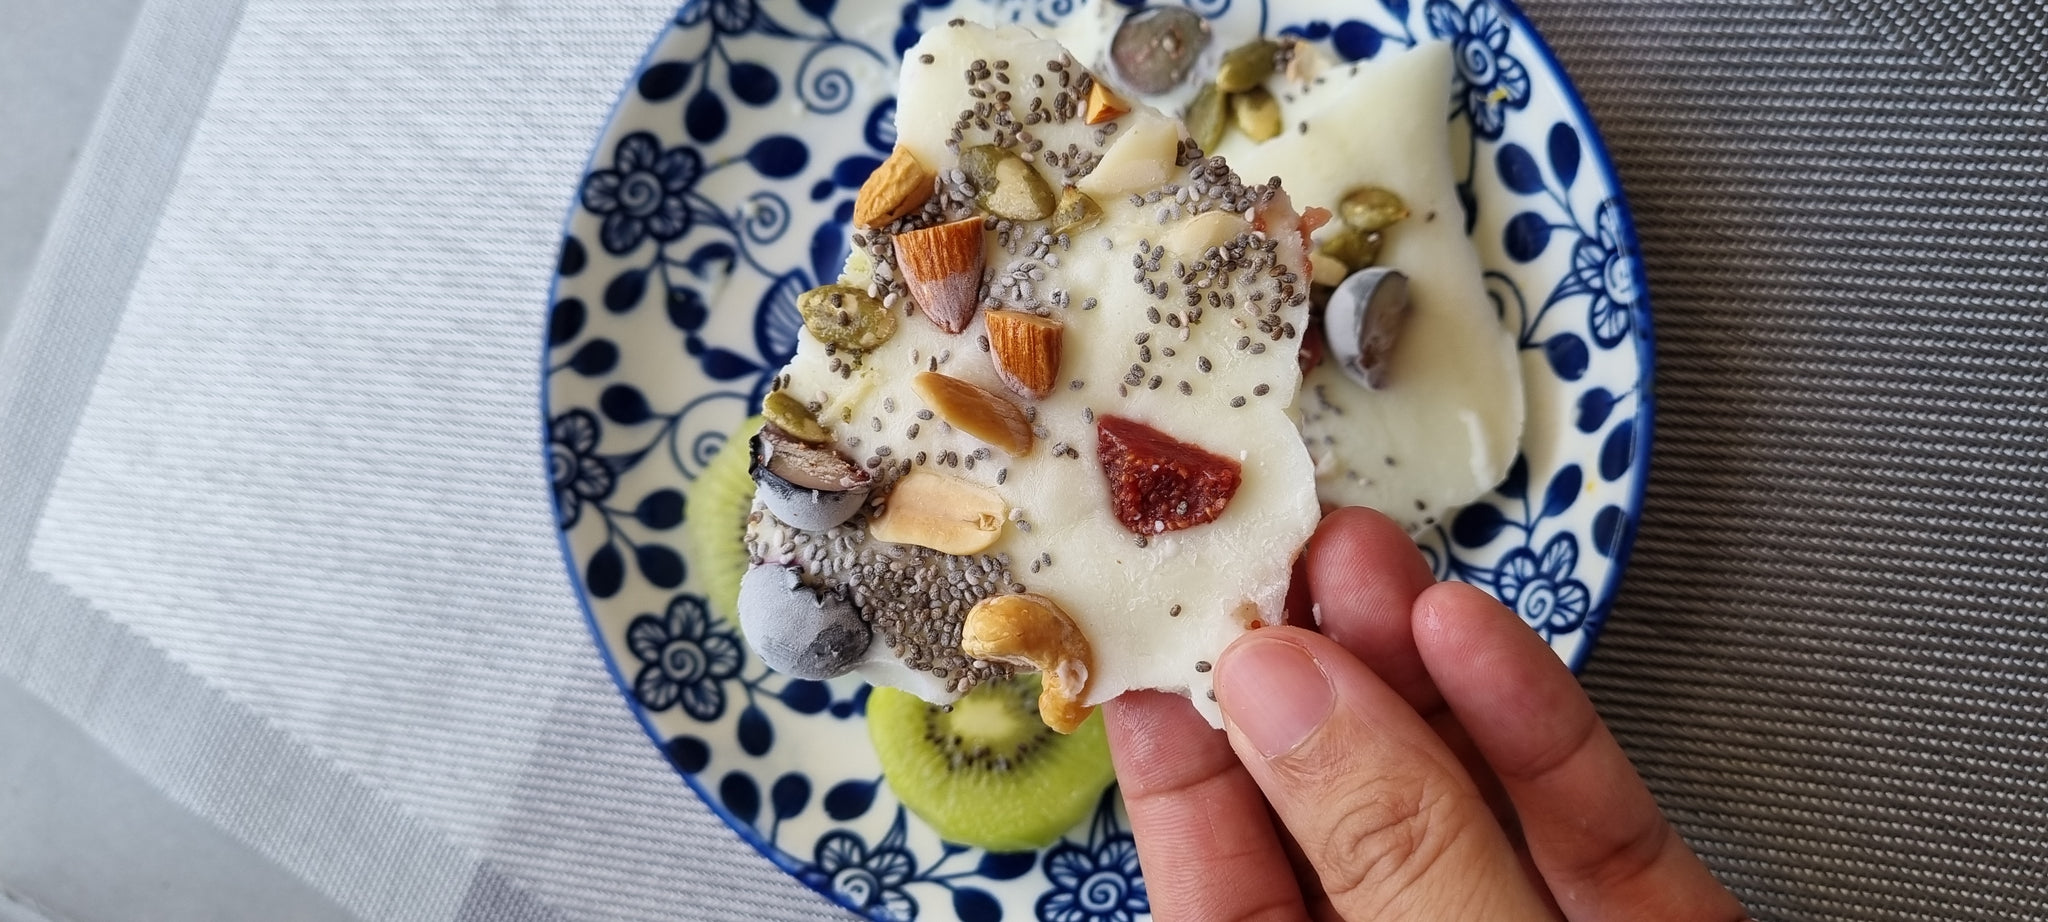 PCOS-Friendly Frozen Yogurt Bark With Greek Yogurt, Nuts, Berries, and Seeds